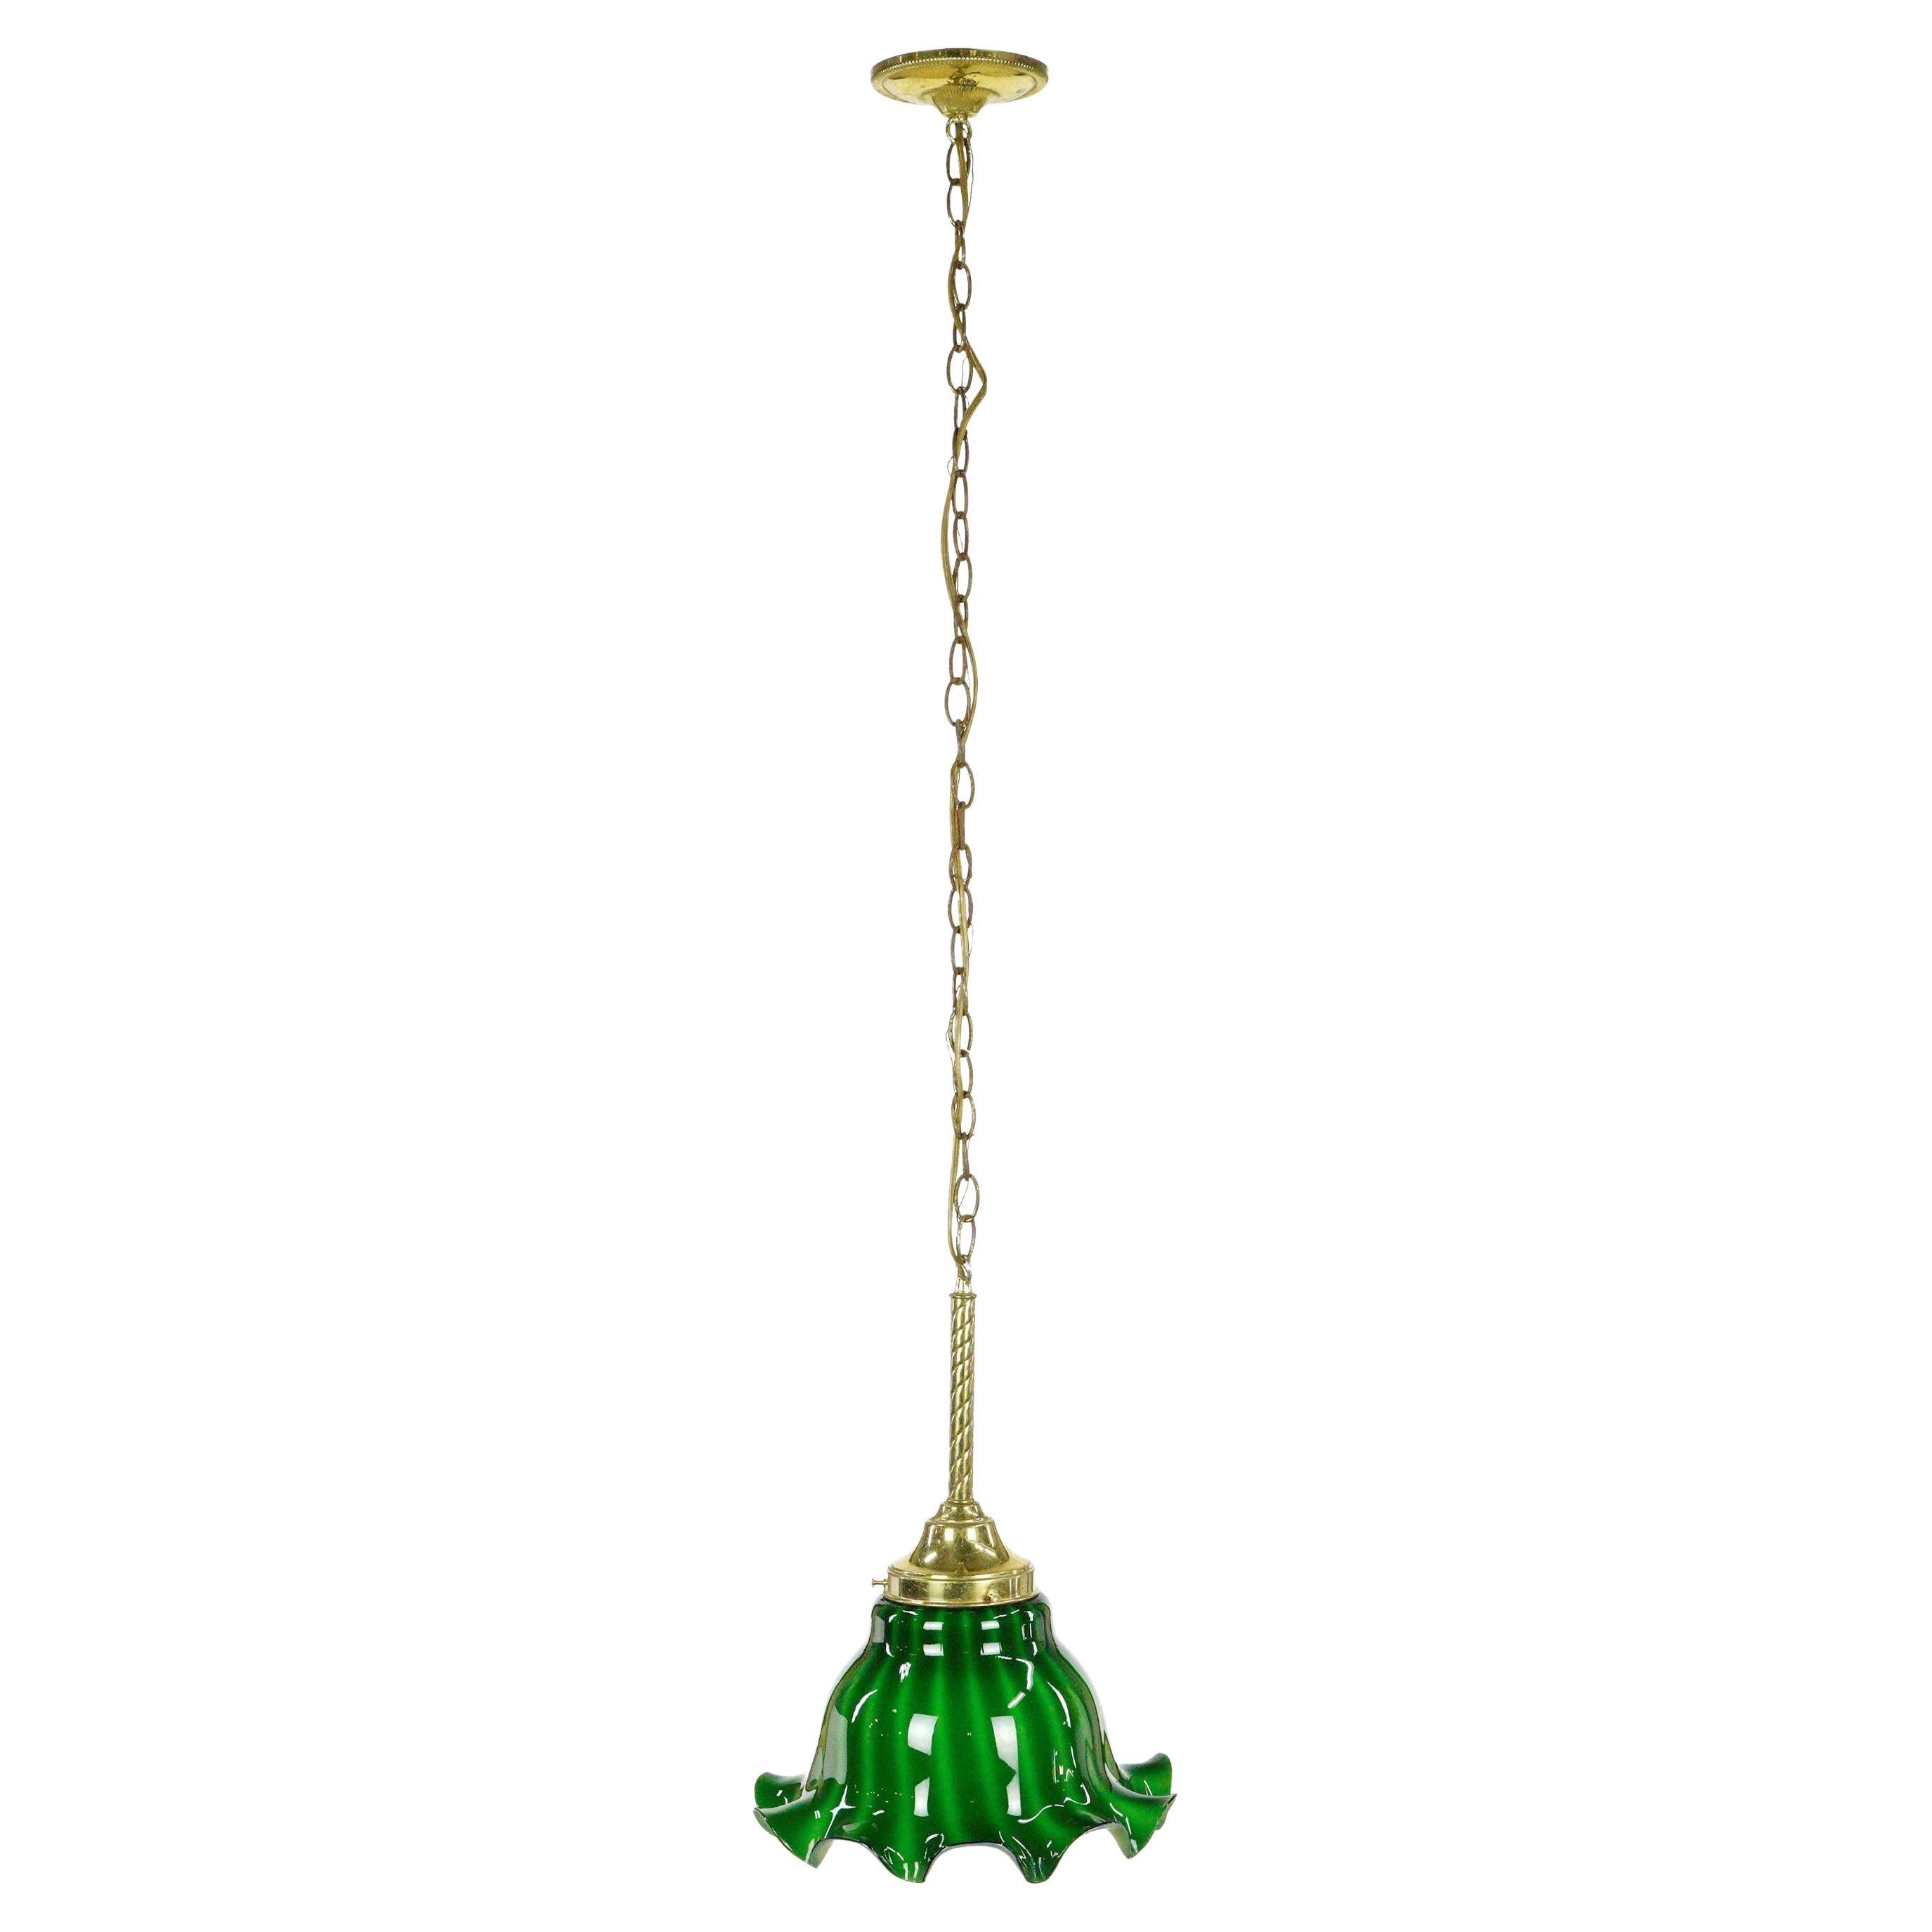 Ruffled Green Glass Shade Brass Chain Pendant Light For Sale